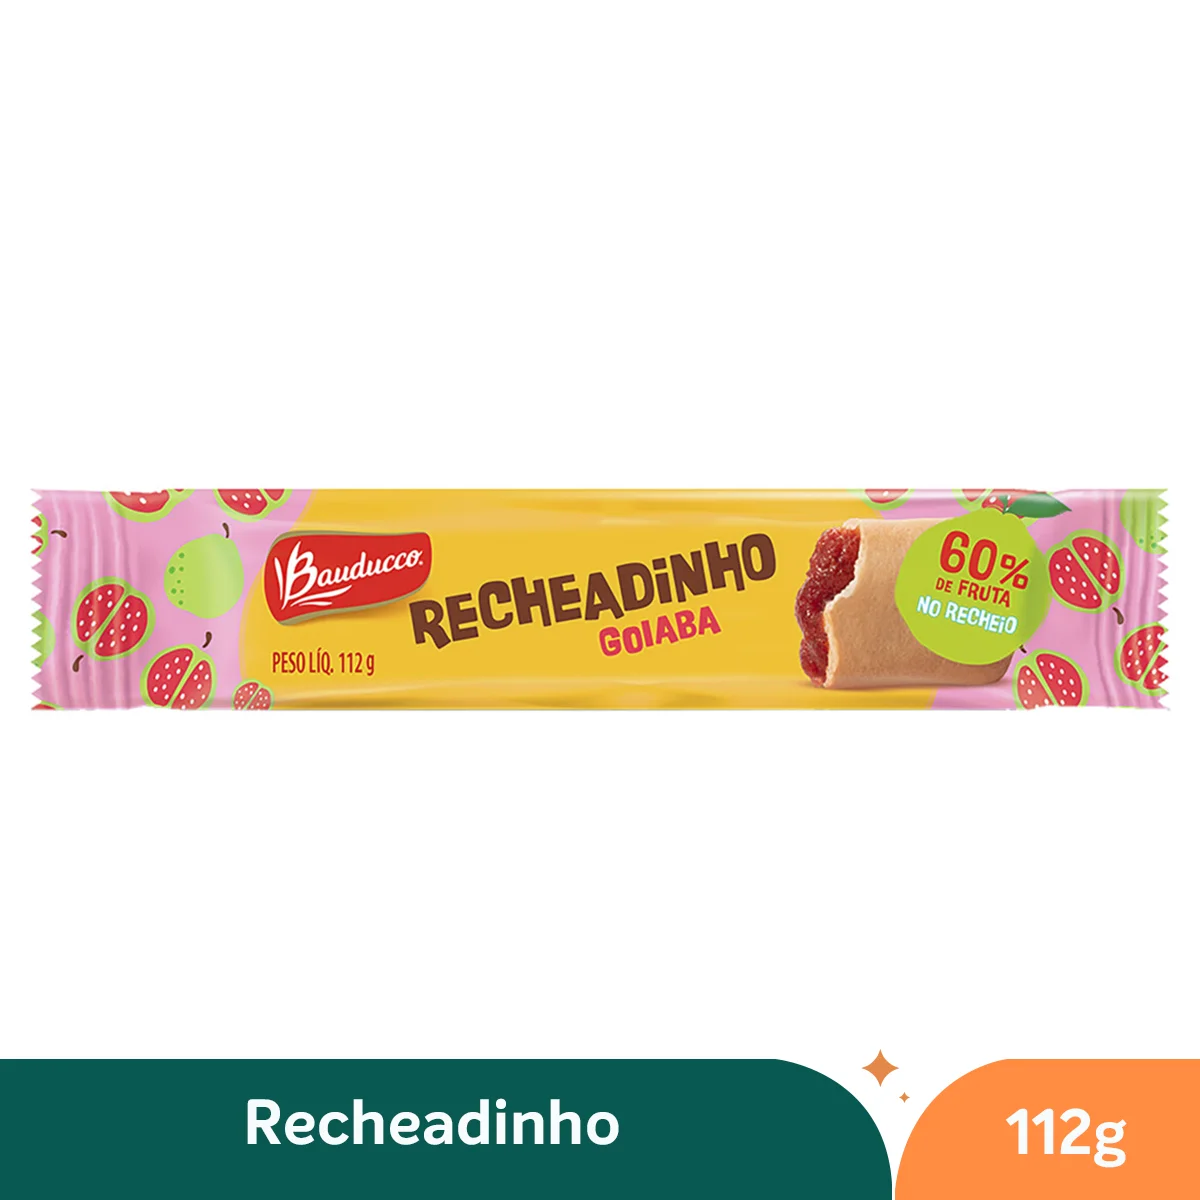 Biscoito Bauducco Recheadinho Goiabinha 112g - Biscoito / Bolacha